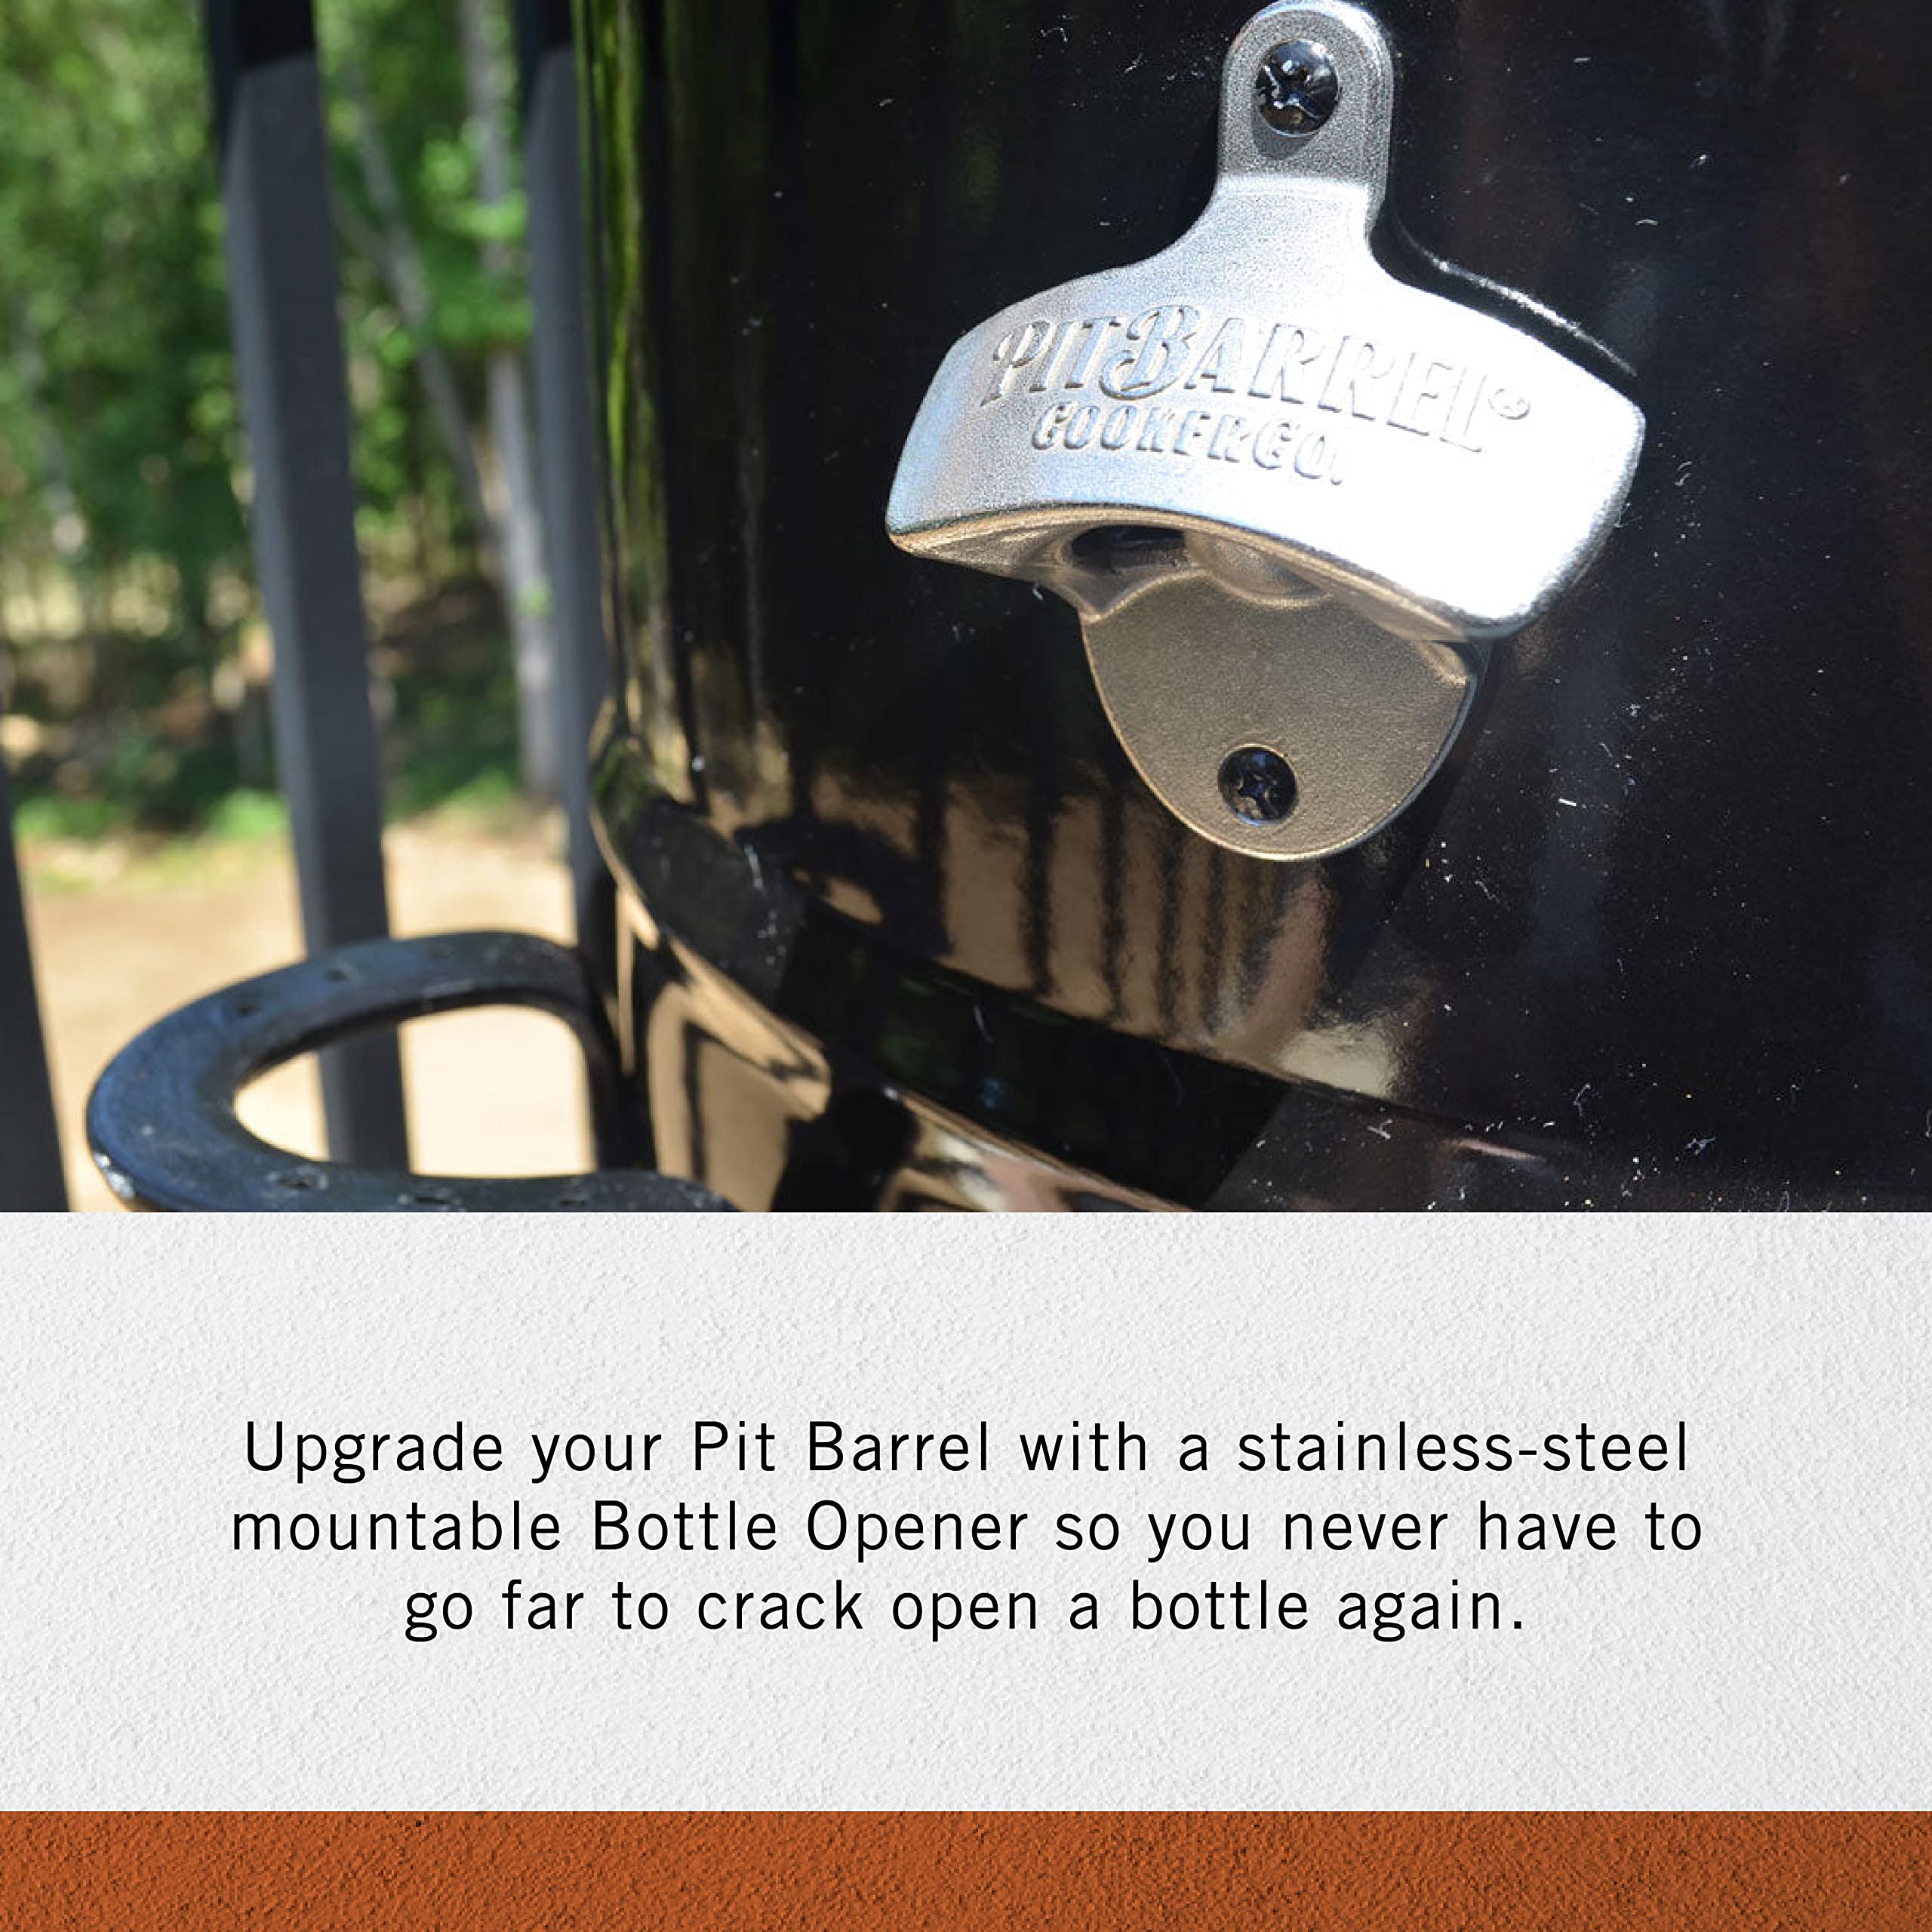 Pit Barrel Cooker Bottle Opener | Stainless Steel Wall Mount Bottle Opener | Install Indoors, Outdoors or Attach to Pit Barrel Grill | Stainless Steel